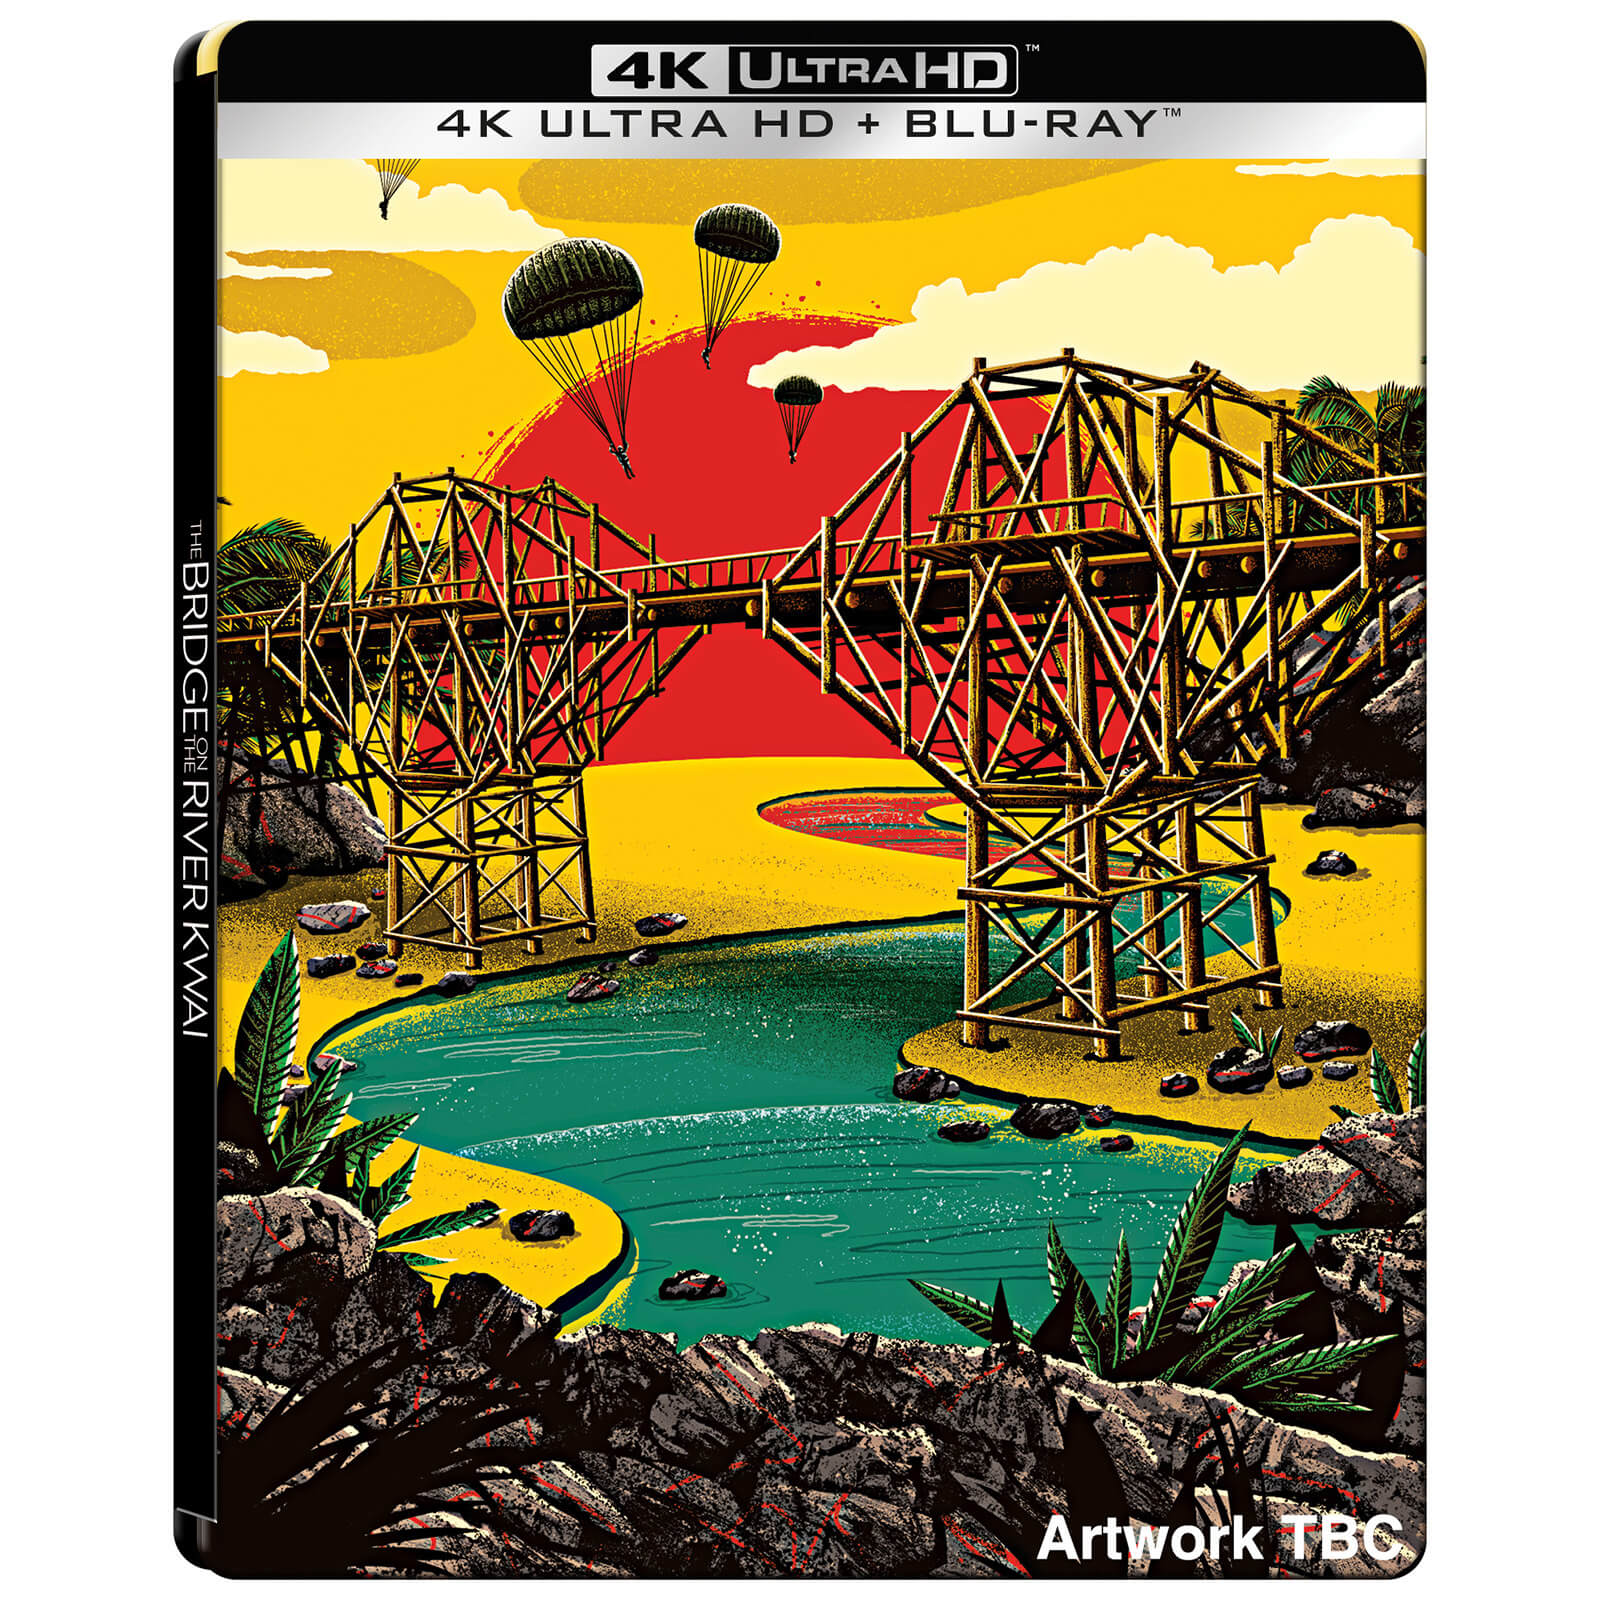 The Bridge On The River Kwai - Zavvi Exclusive 4K Ultra HD Steelbook (includes Blu-ray)